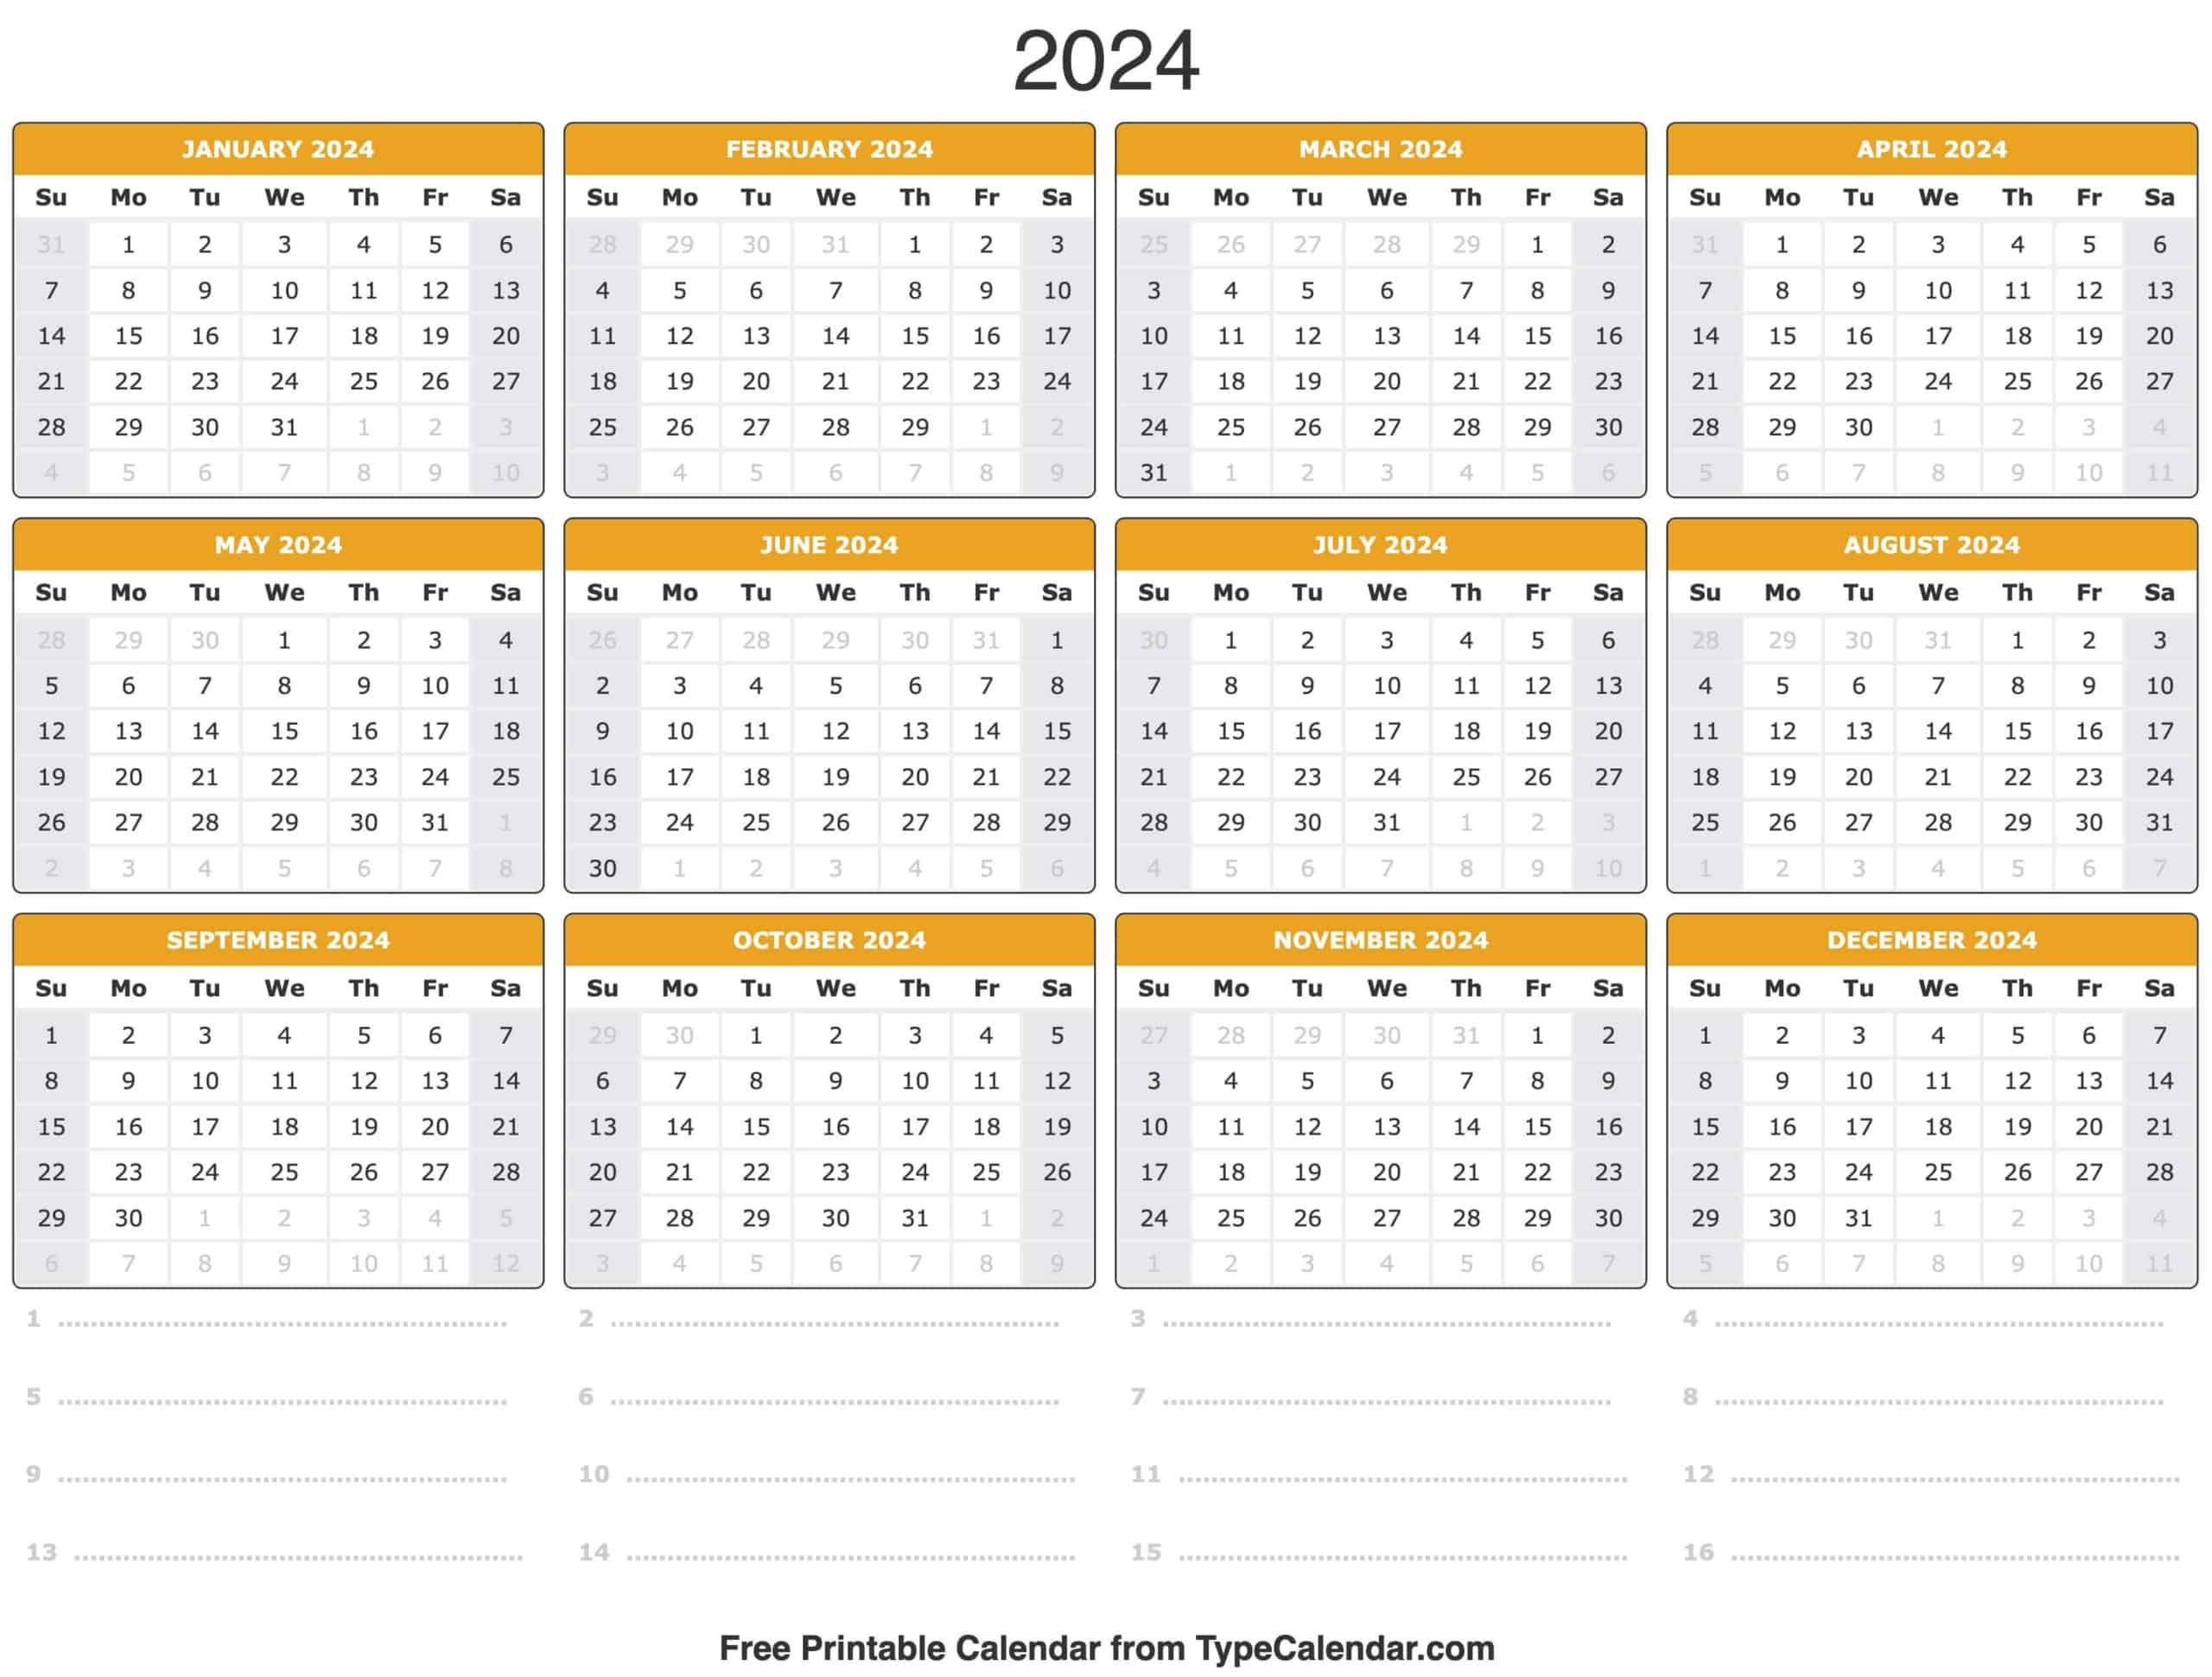 2024 Calendar: Free Printable Calendar With Holidays | Free Printable Calendar 2024 Without Download